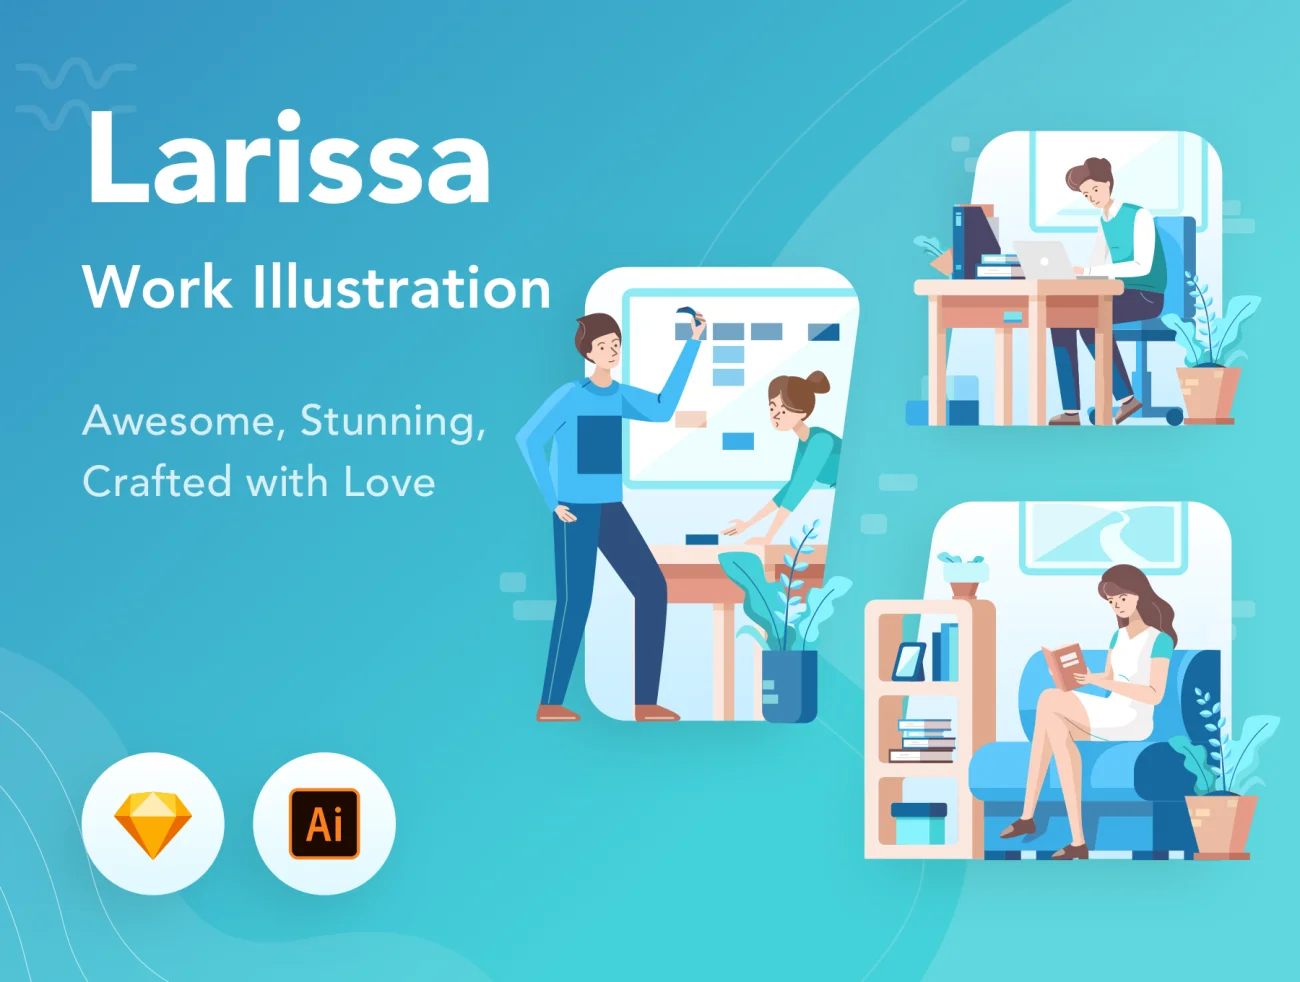 Larissa Work Illustration 工作办公生活客服会面互帮互助插图作品-人物插画、人物模特、场景插画、学习生活、插画、社交购物、线条手绘、职场办公、营销创业-到位啦UI